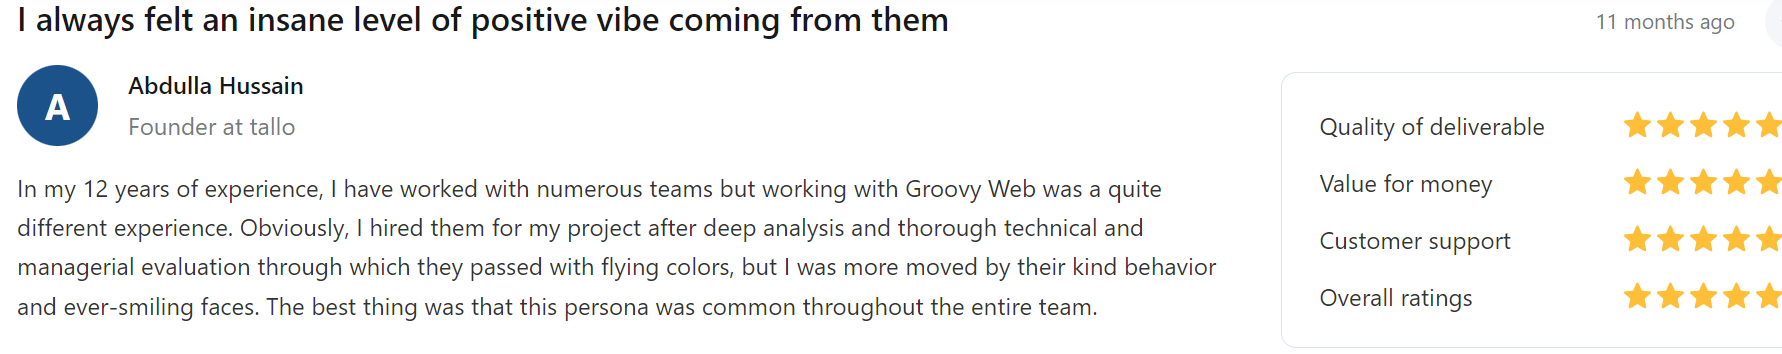 Groovy Web IA - Review 1